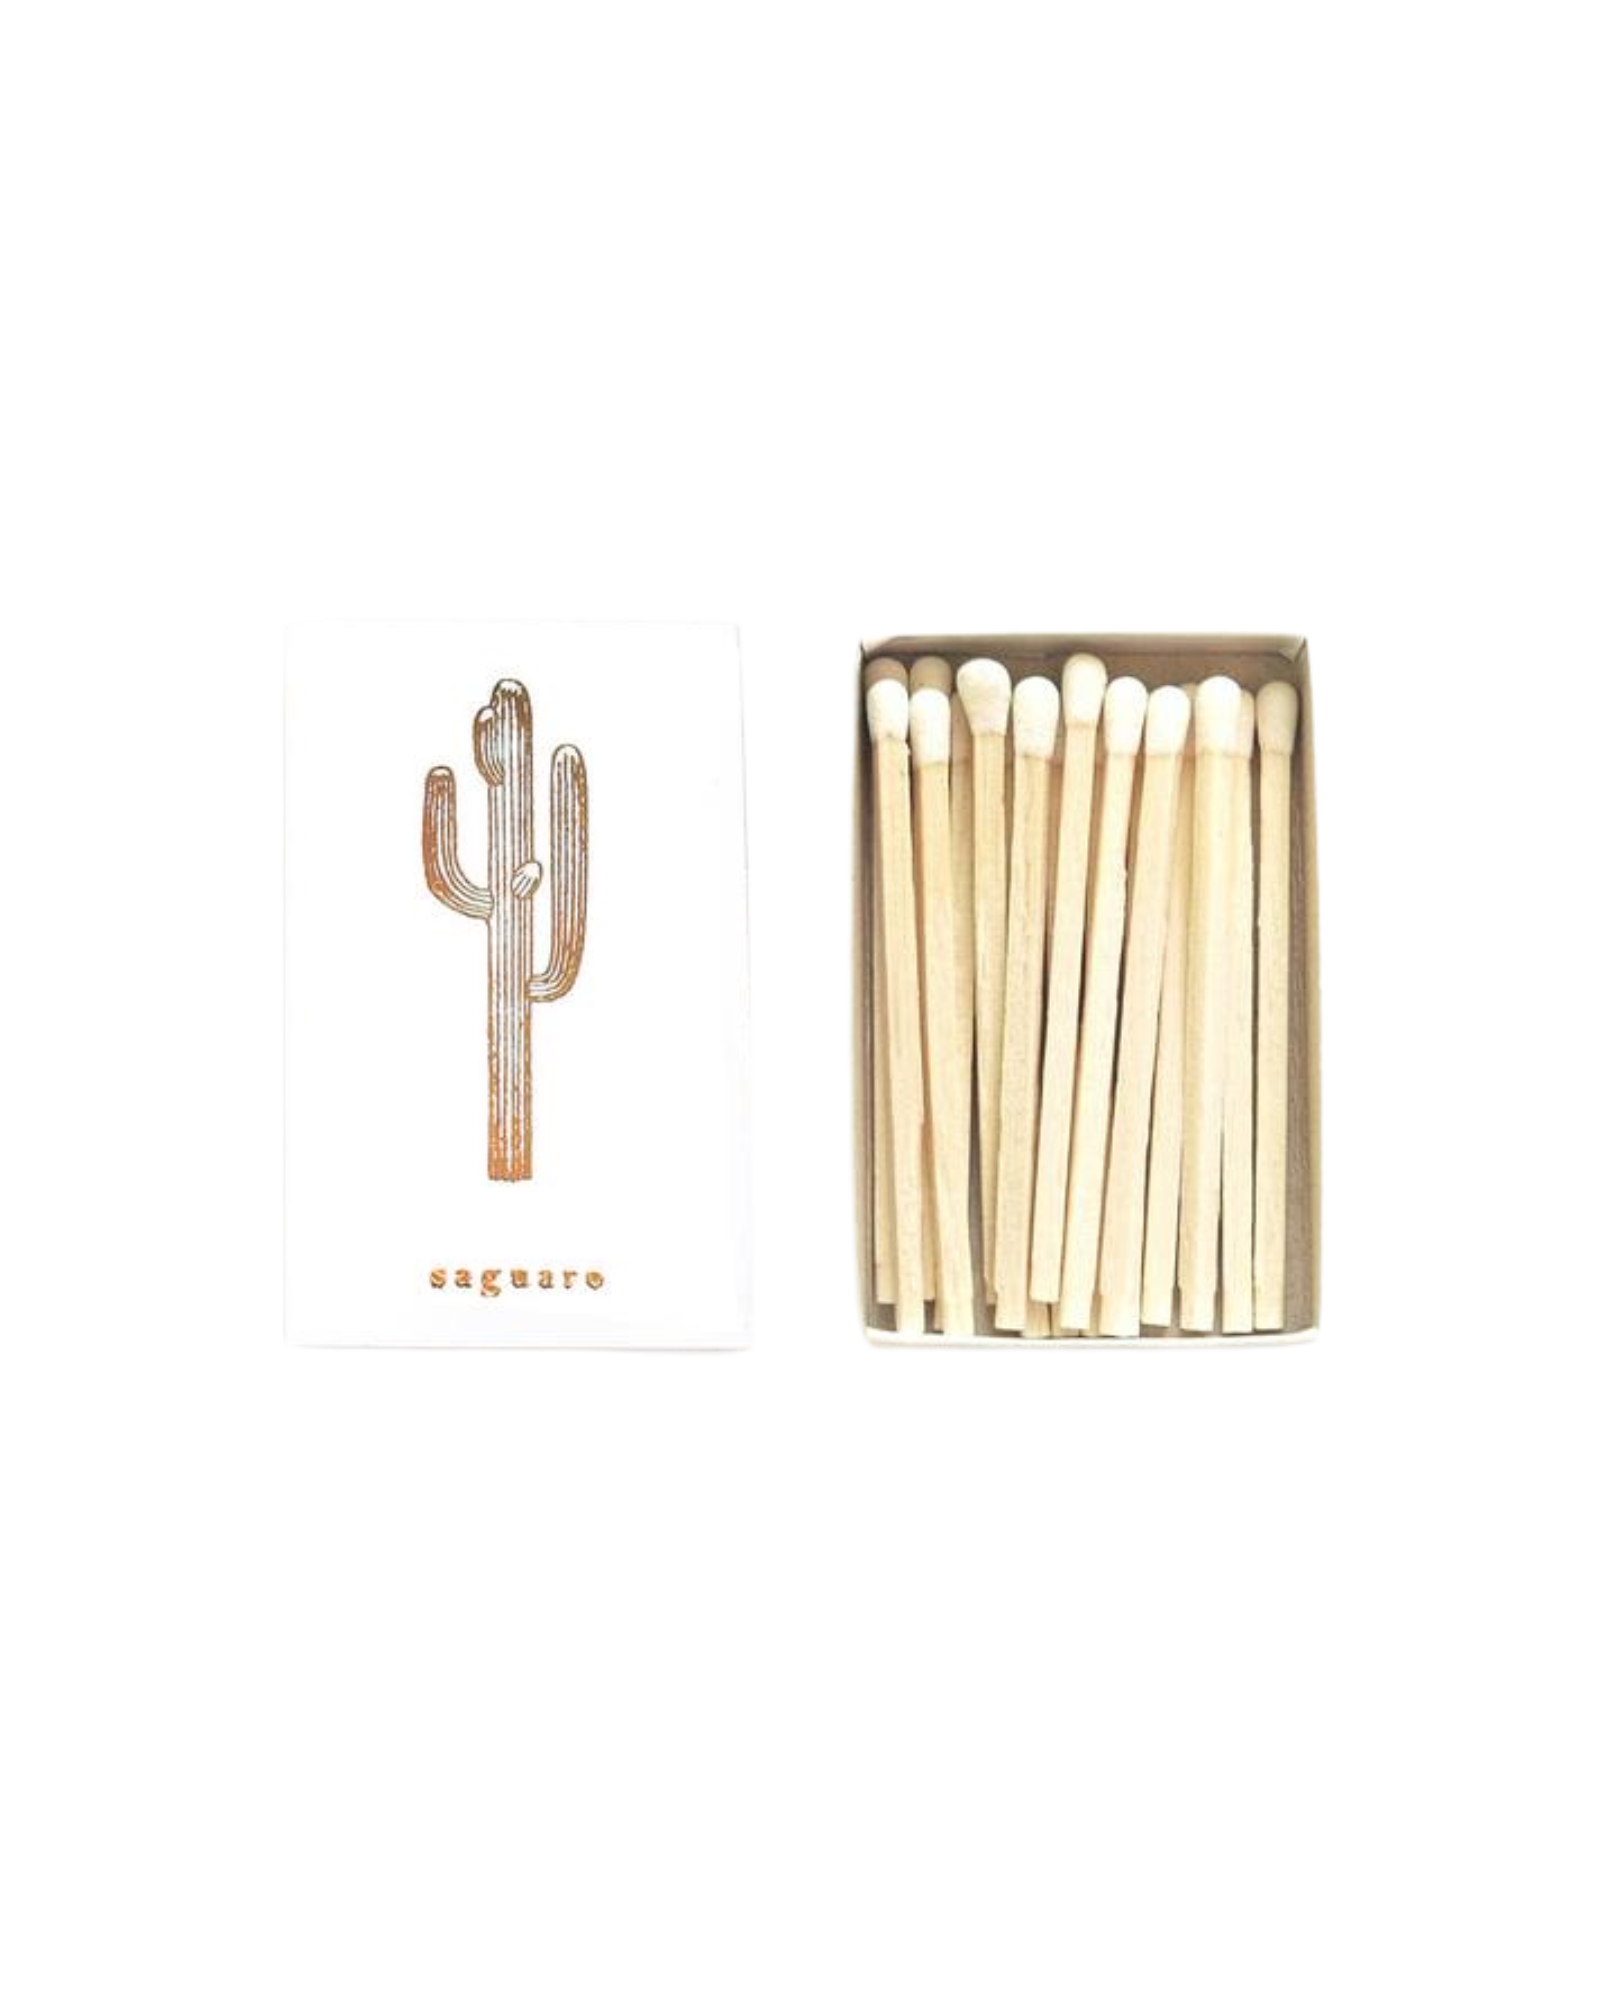 Saguaro Cactus Matchbox - White Box